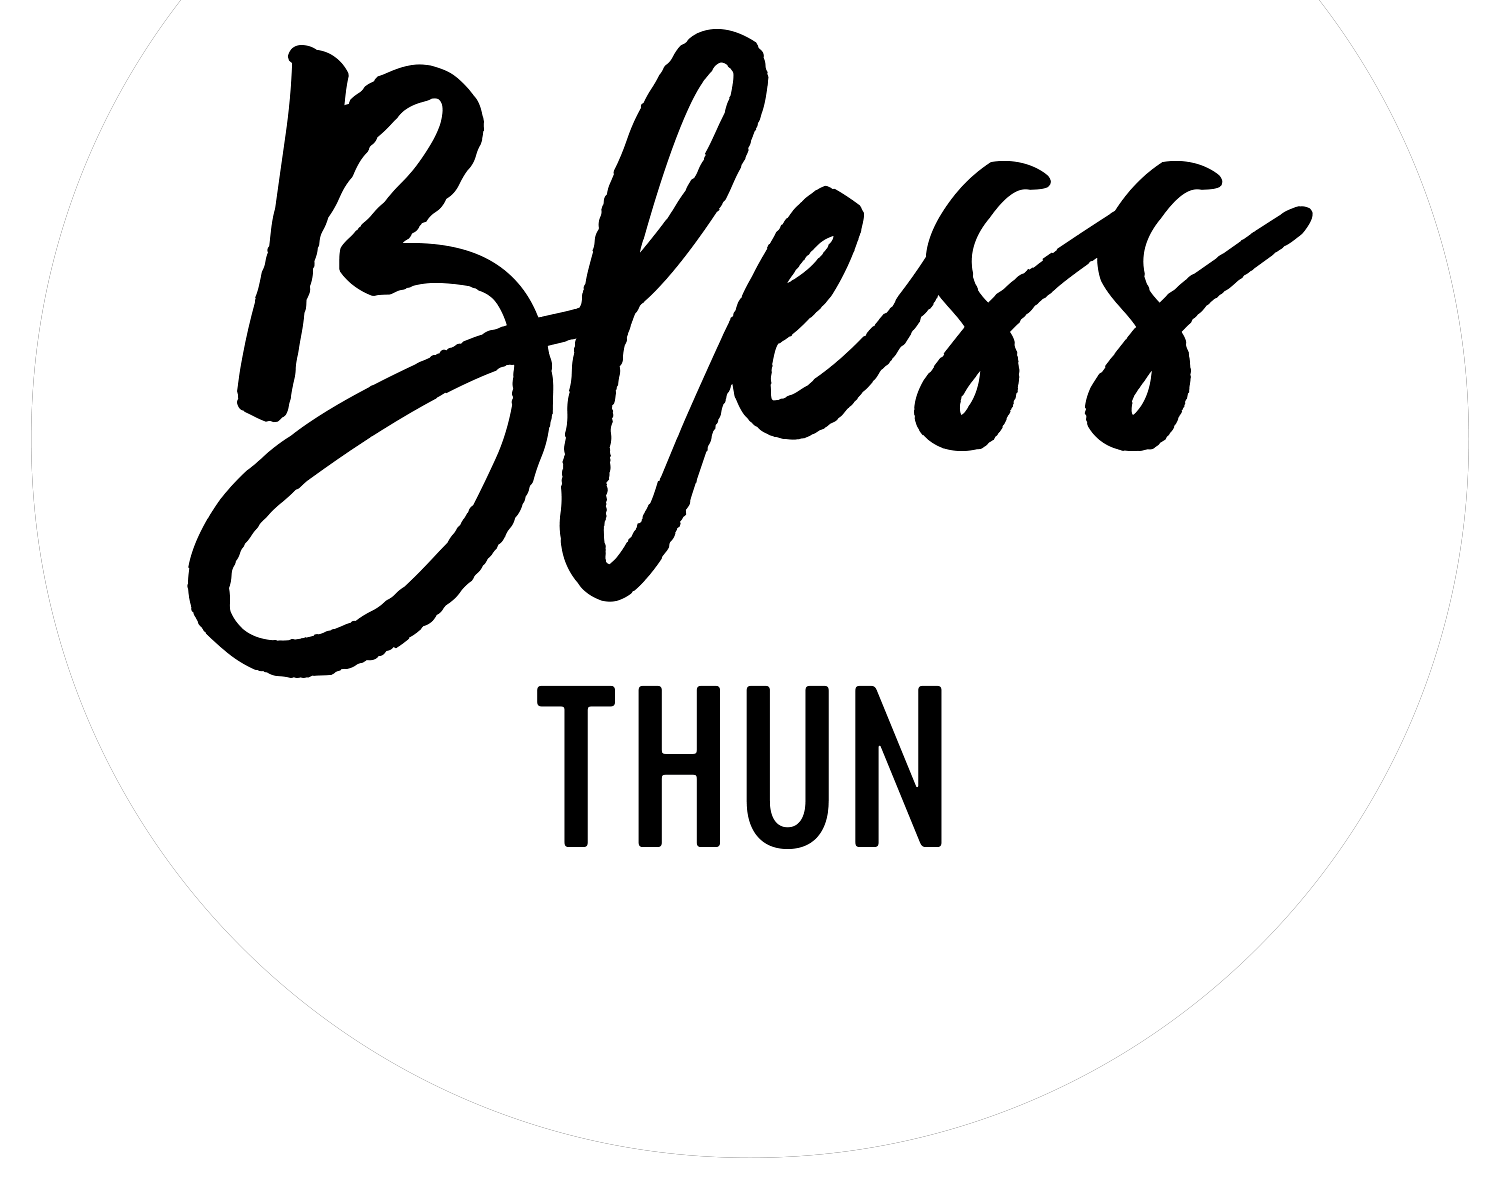 Blessthun logocut